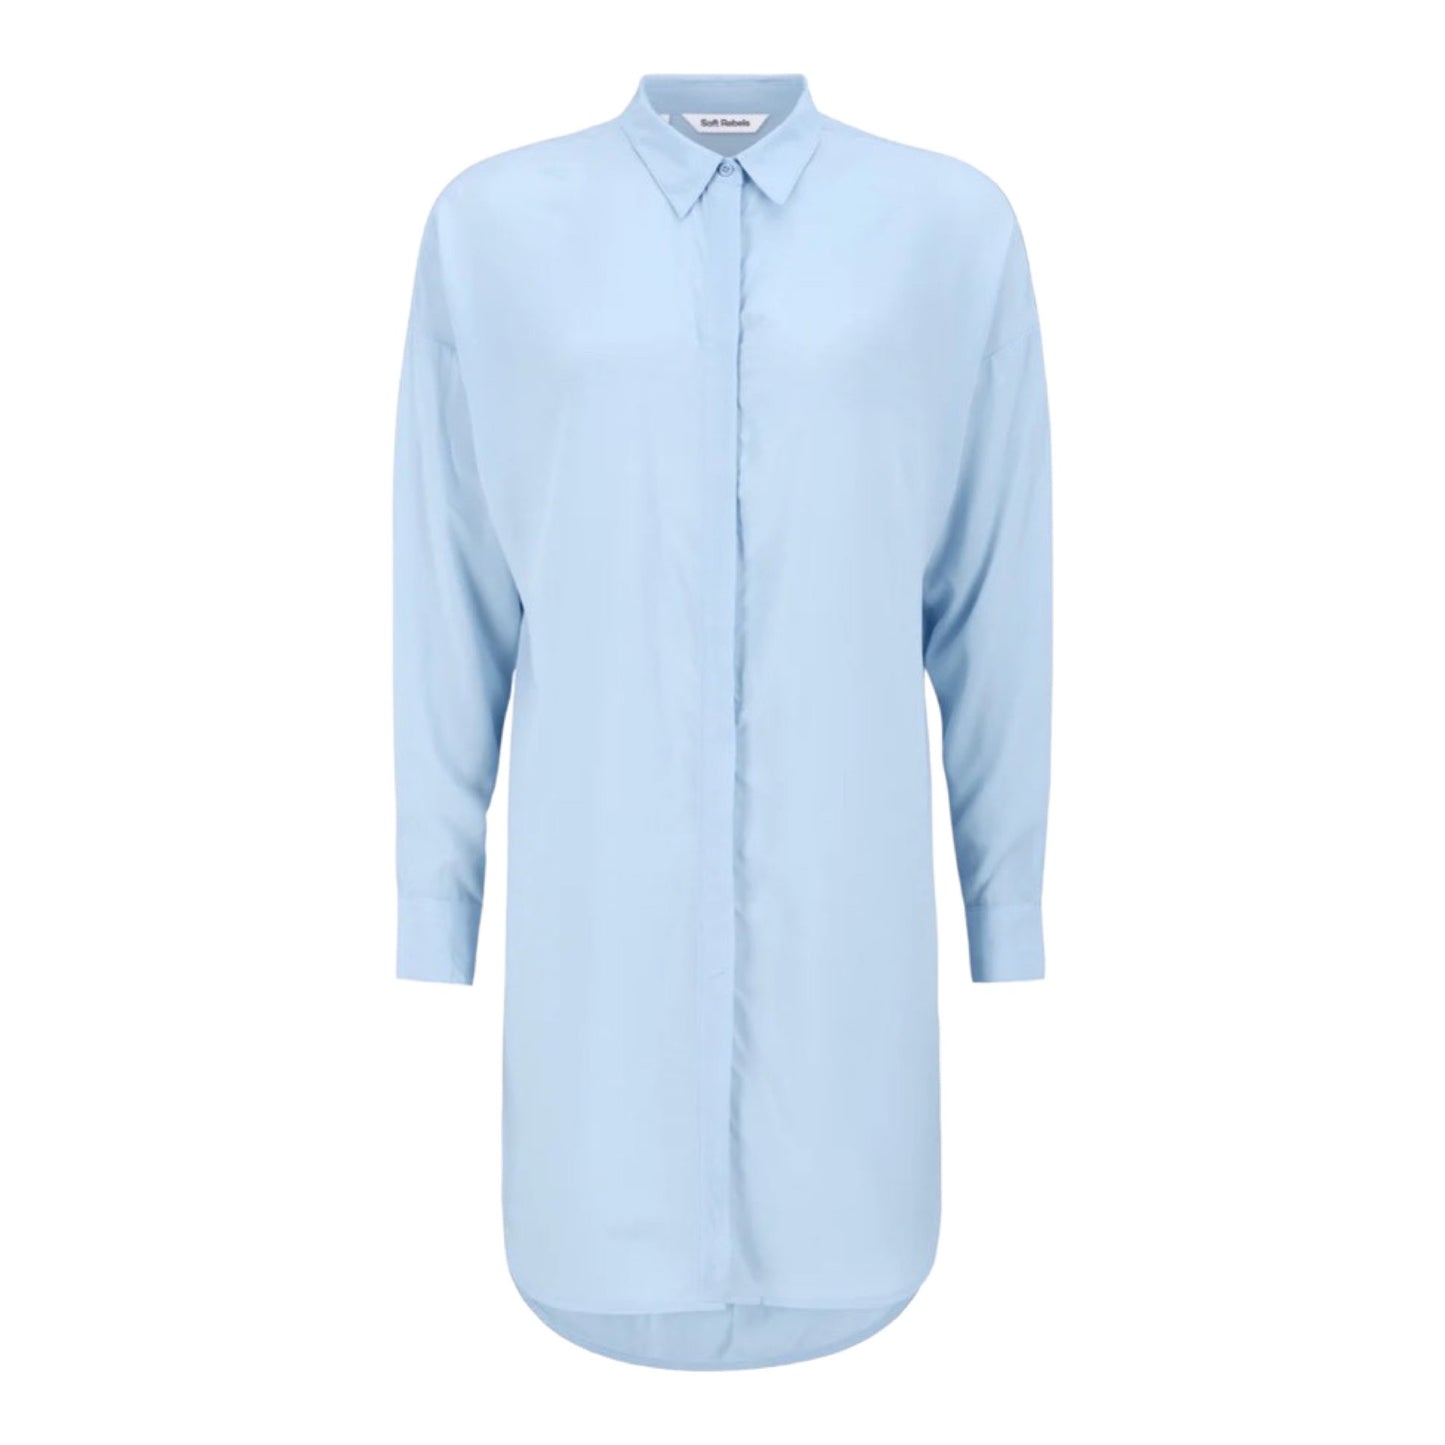 Soft rebels - SRfreedom Long Shirt - cashmere blue